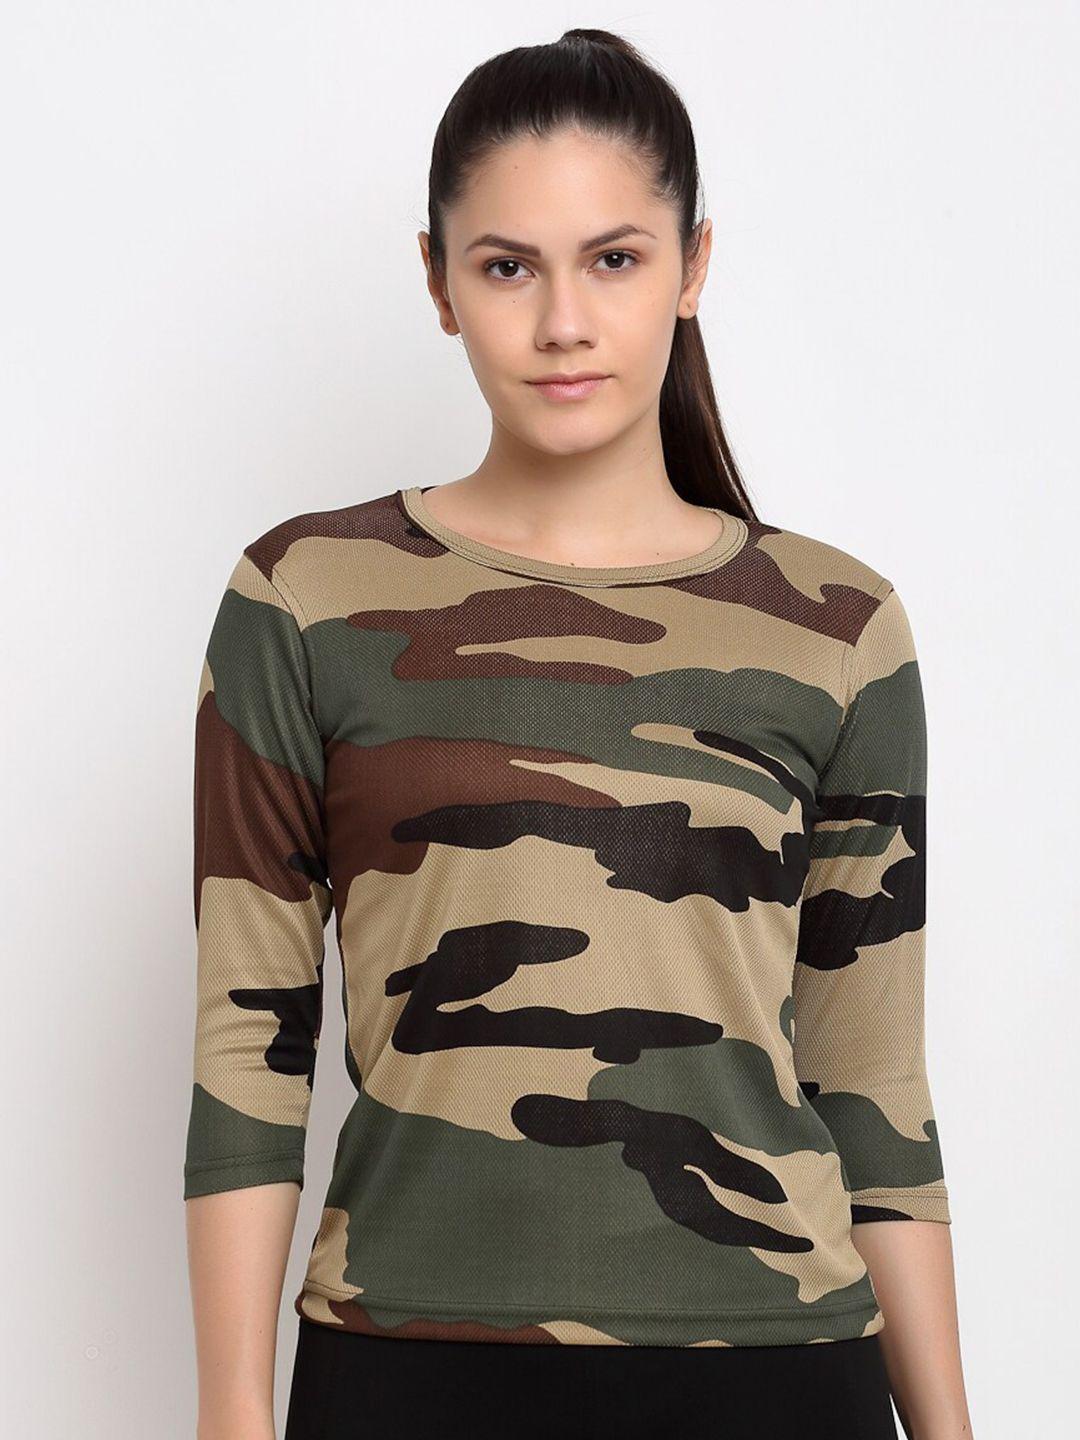 armisto women olive green & beige camouflage printed dri-fit slim fit training or gym t-shirt